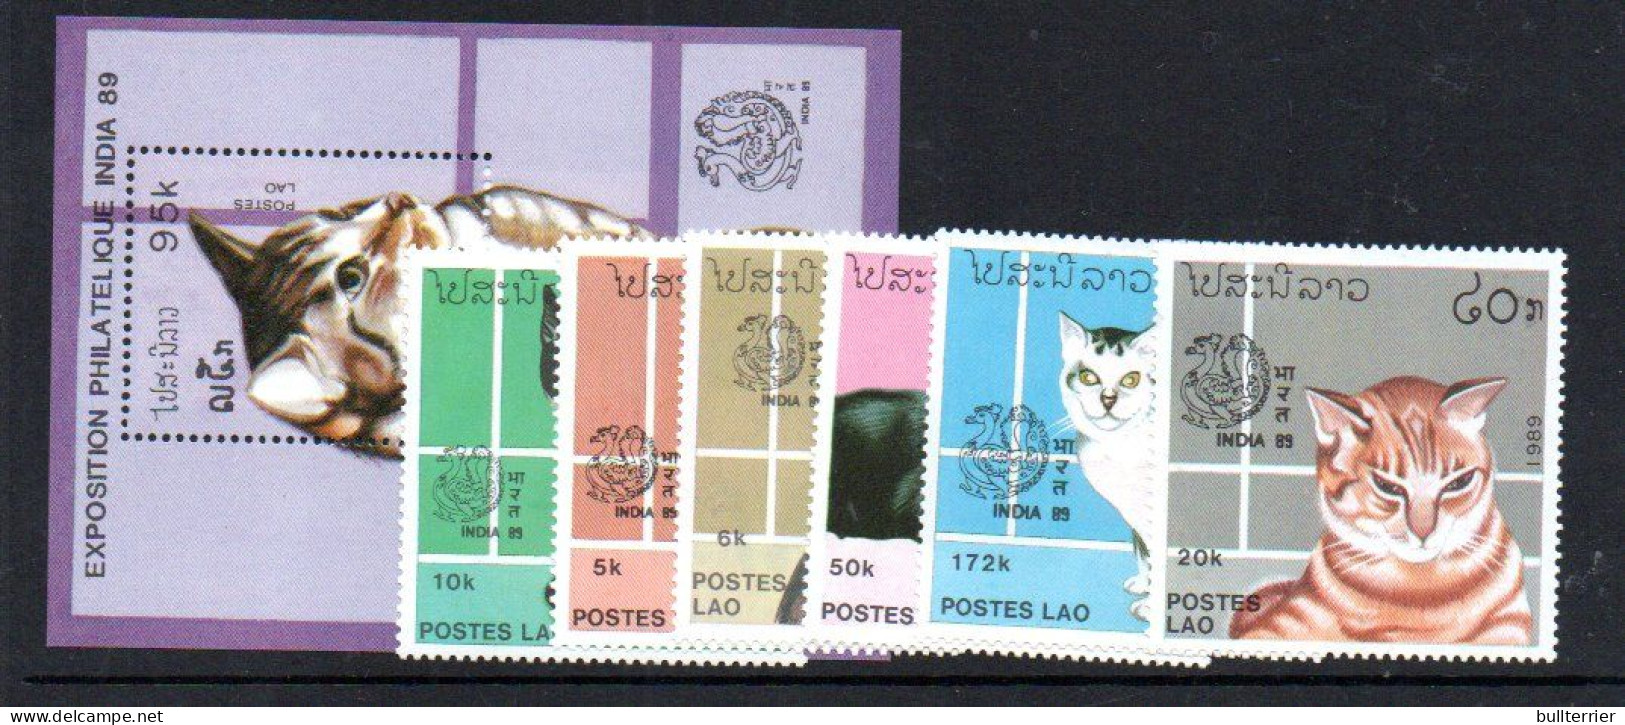 LAOS -  1989 - INDIA EXPOSITION / DOMESTIC CATS SET OF 6 +SOUVENIR SHEET MINT NEVER HINGED, - Laos